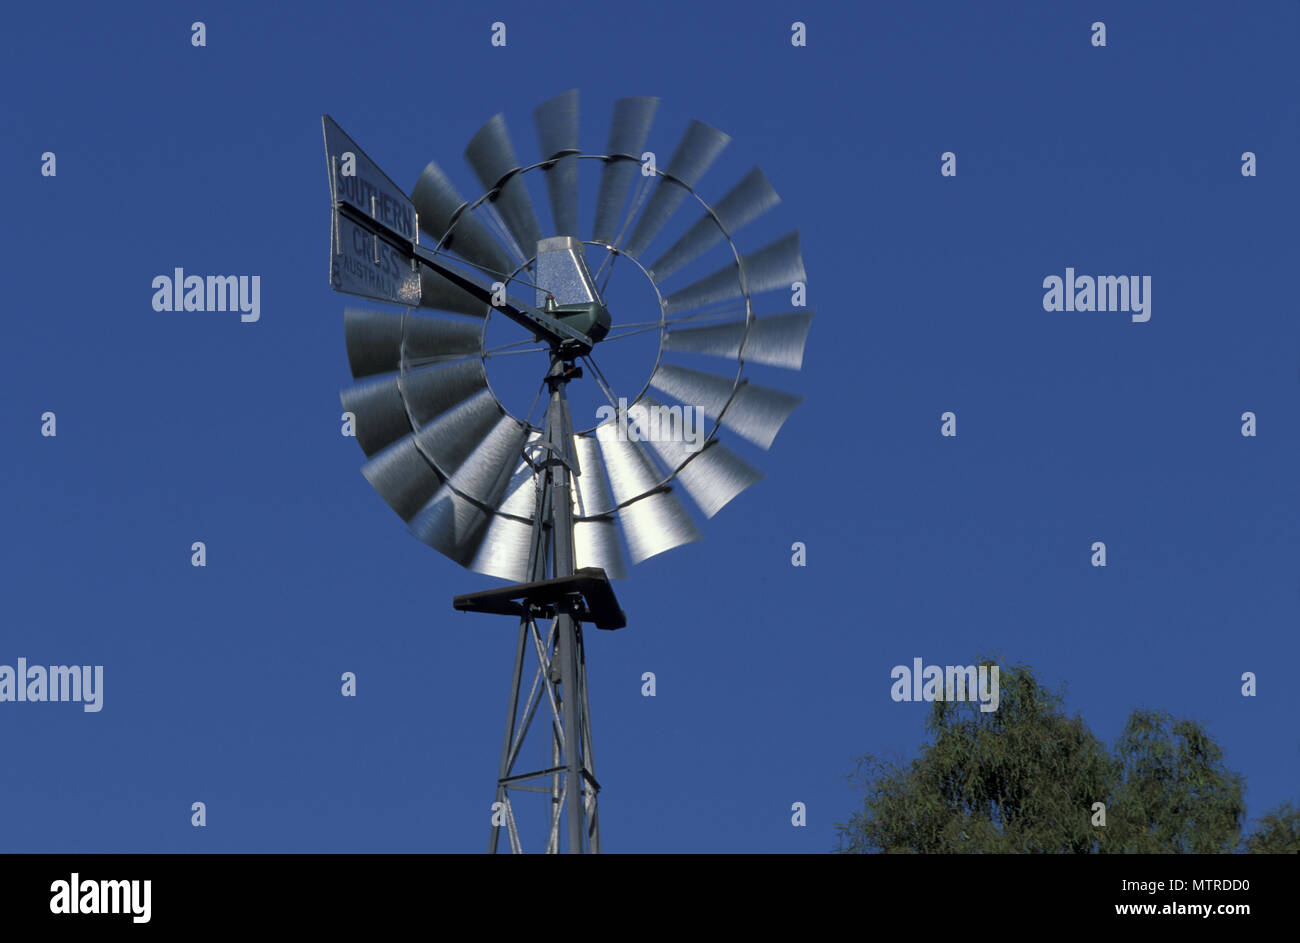 WINDMILL AGAINST BLUE SKY, Queensland, Australie Banque D'Images